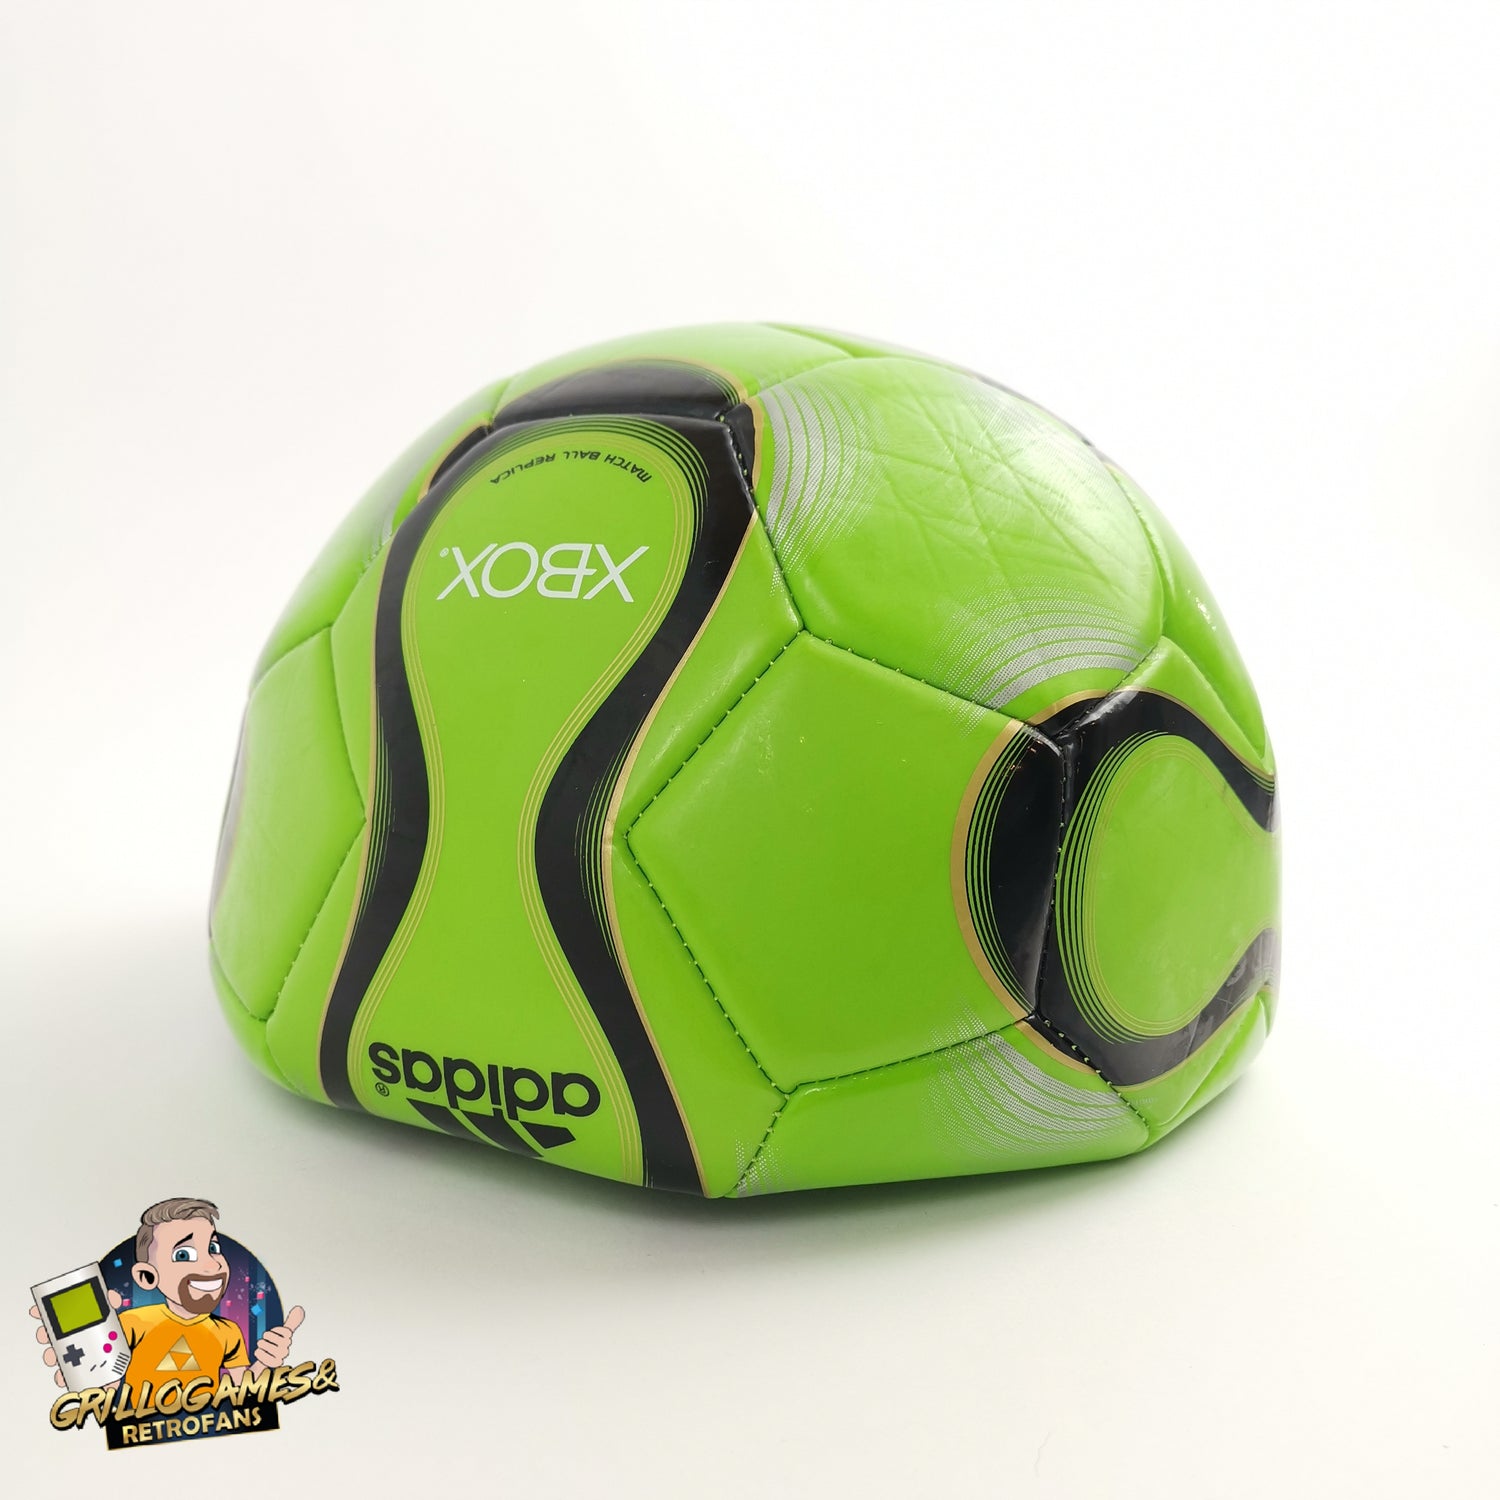 Football Adidas Team Spirit World Cup 2006 XBox Edition Replica NEW NEW